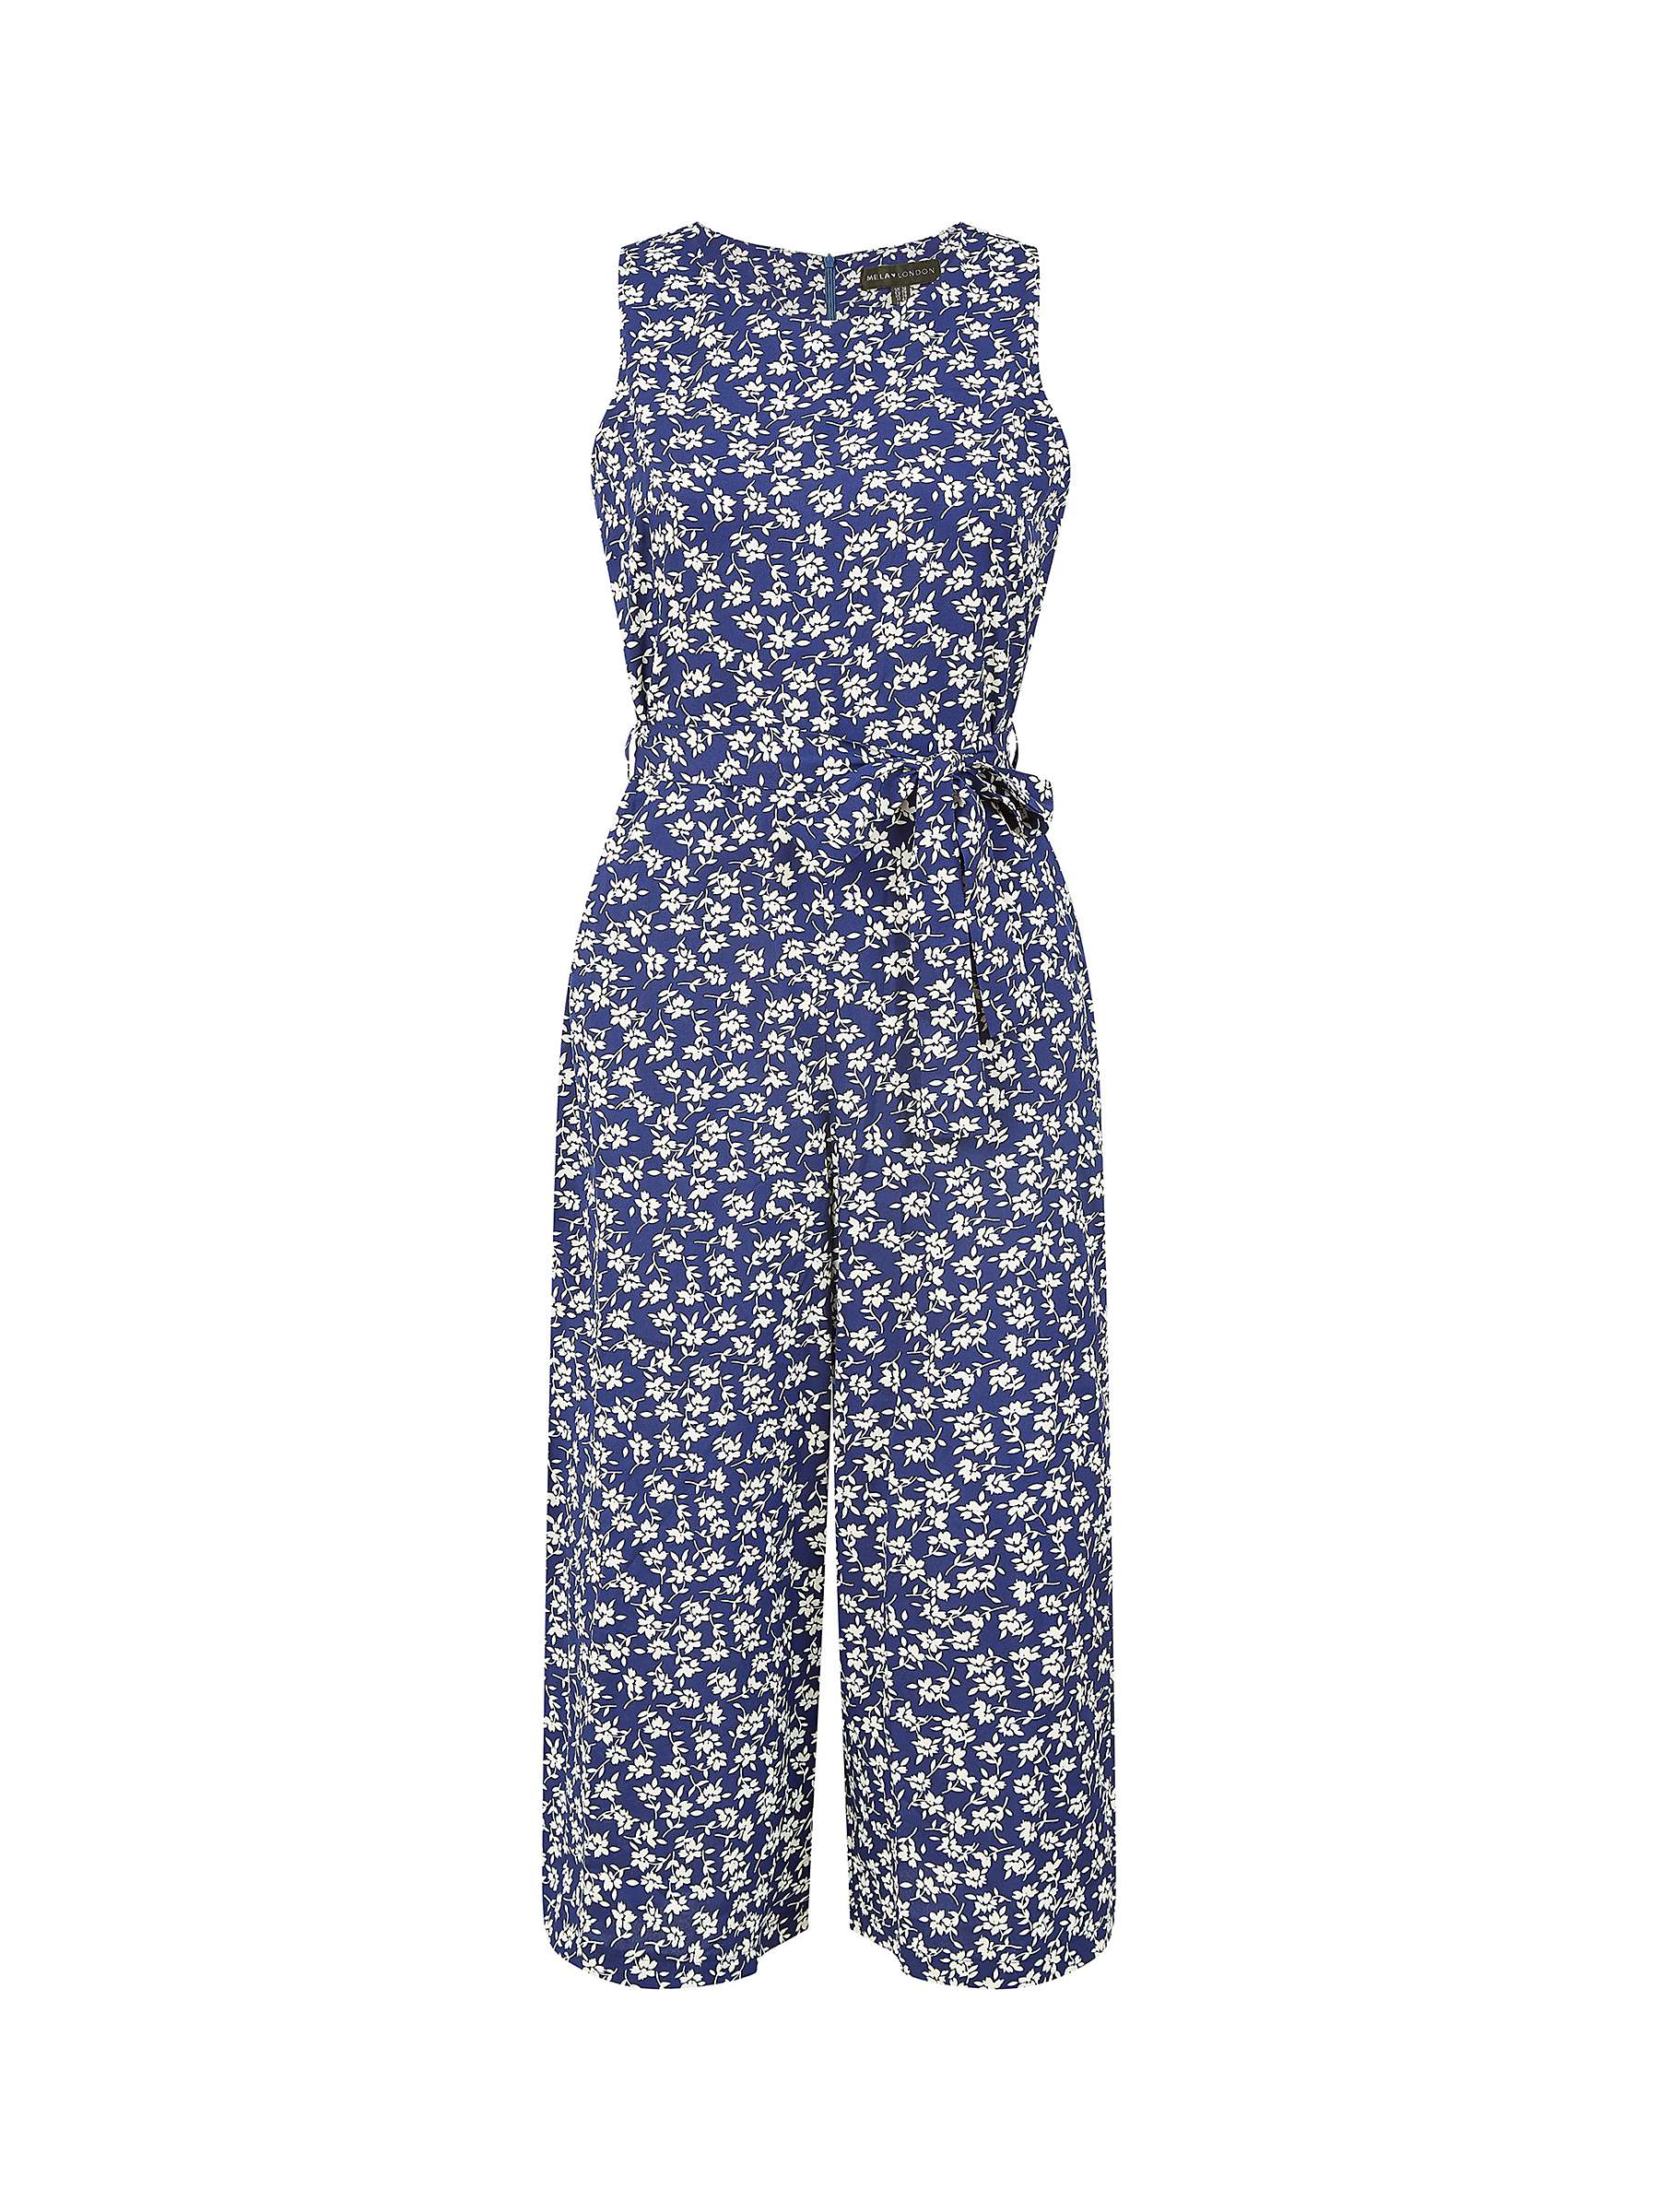 Buy Mela London Ditsy Floral Print Sleeveless Culotte Jumpsuit, Navy Online at johnlewis.com